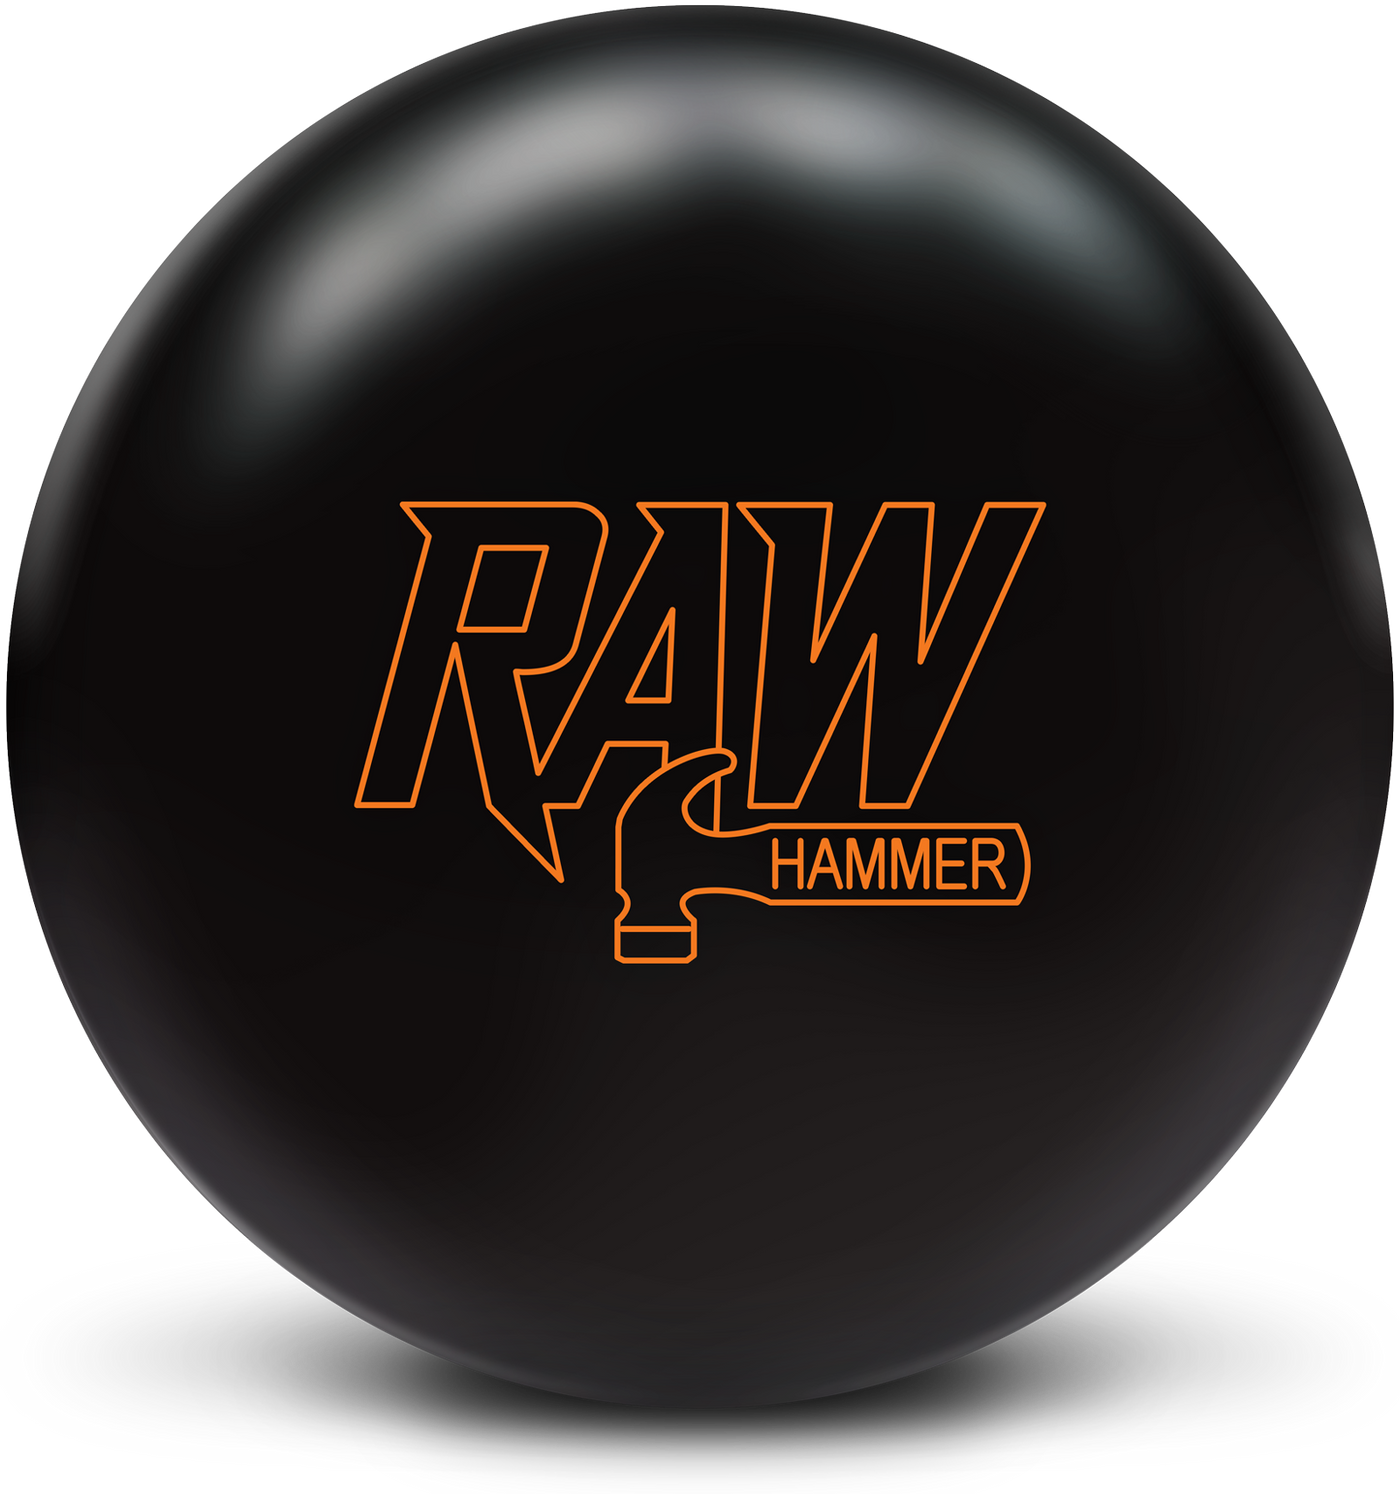 Raw Hammer Black bowling ball